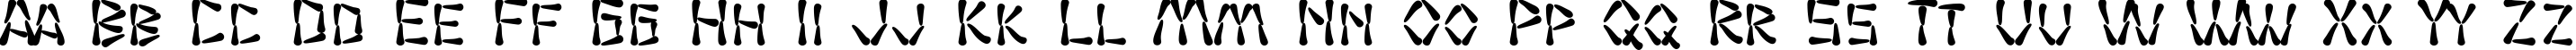 Пример написания английского алфавита шрифтом SF Wasabi Bold